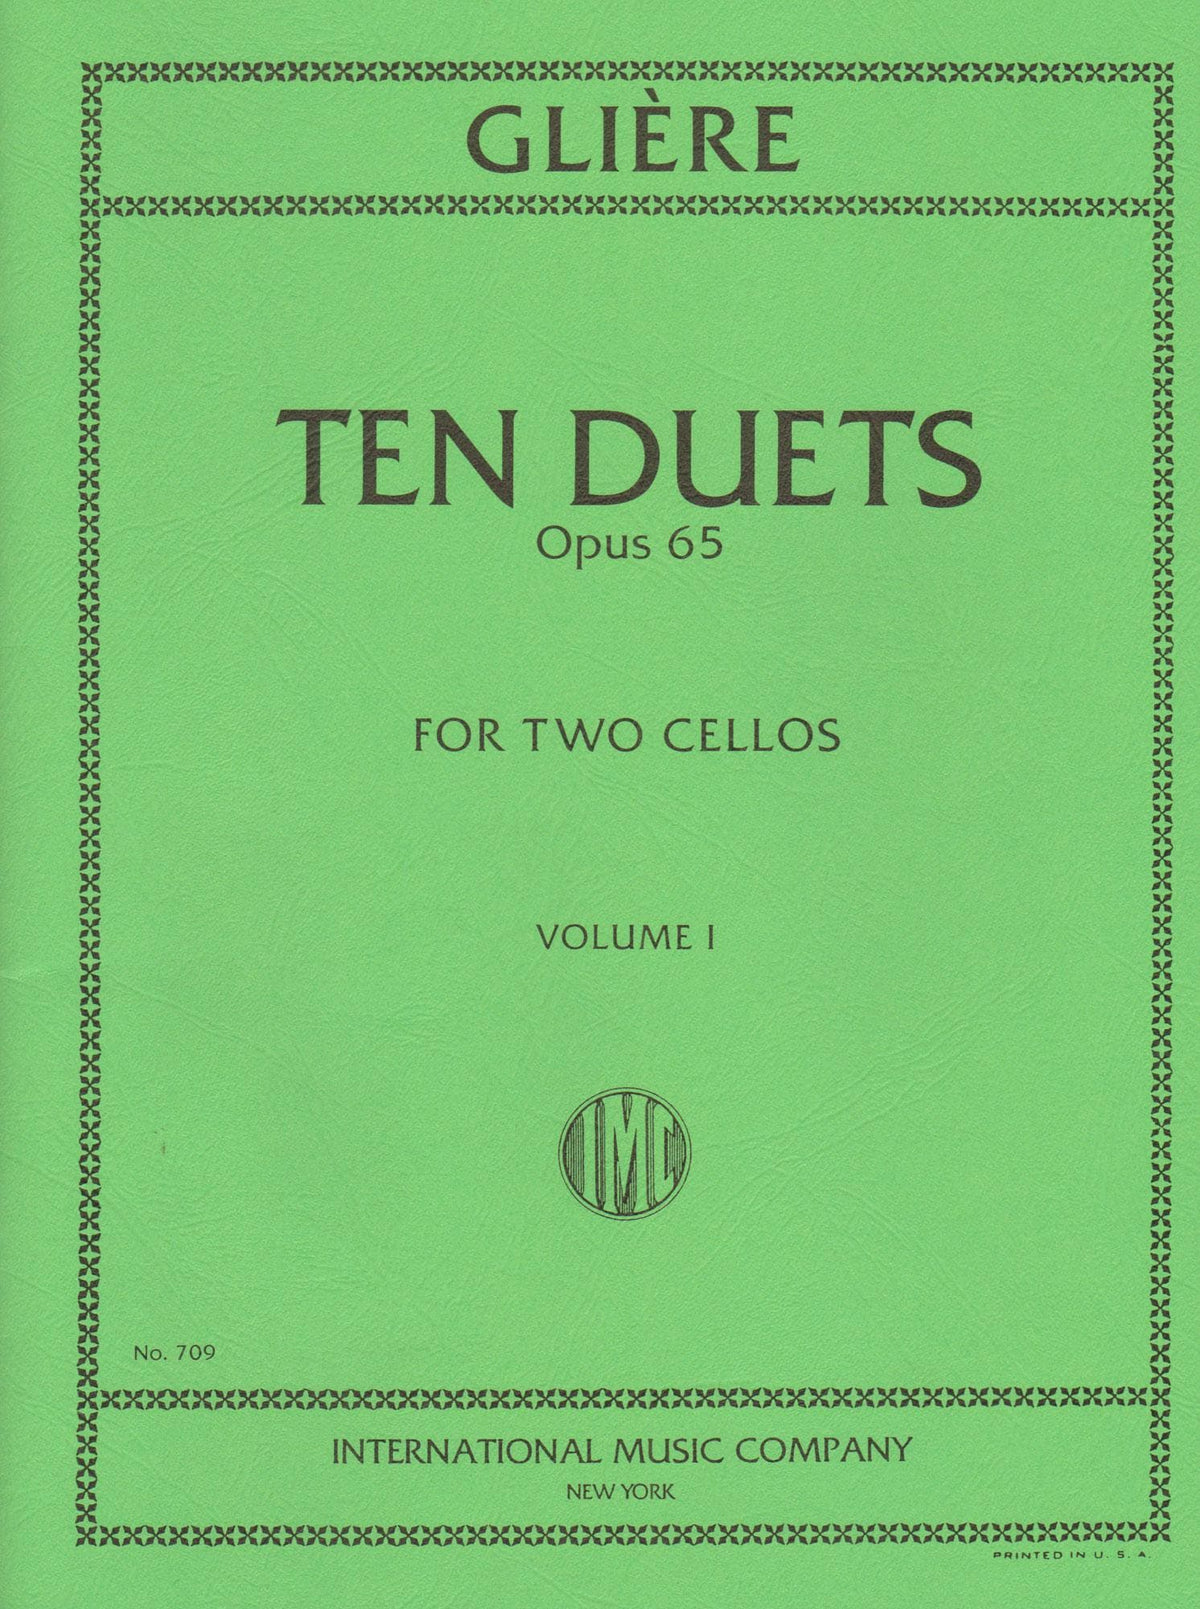 Glière, Reinhold - Ten Duets, Op 53, Volume 1 - Two Cellos - International Edition